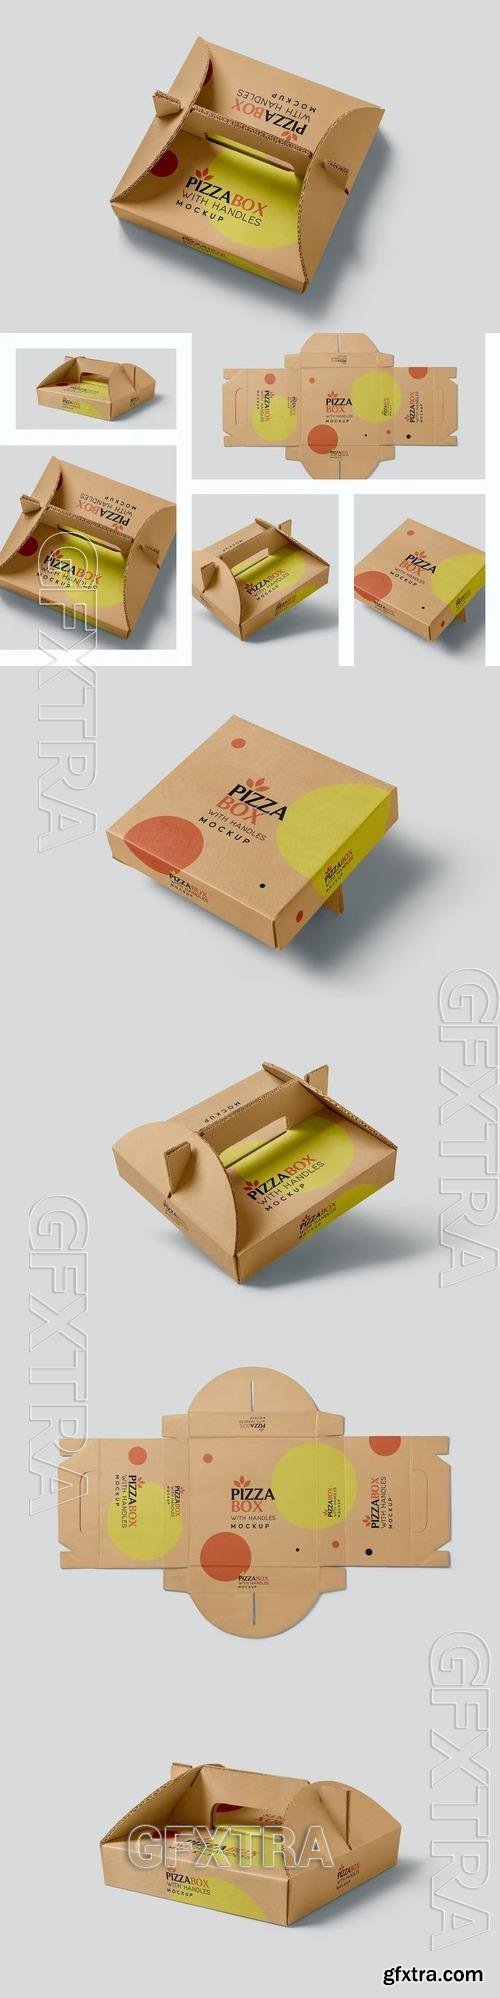 Pizza Box With Handle Mockups ENVQBE9